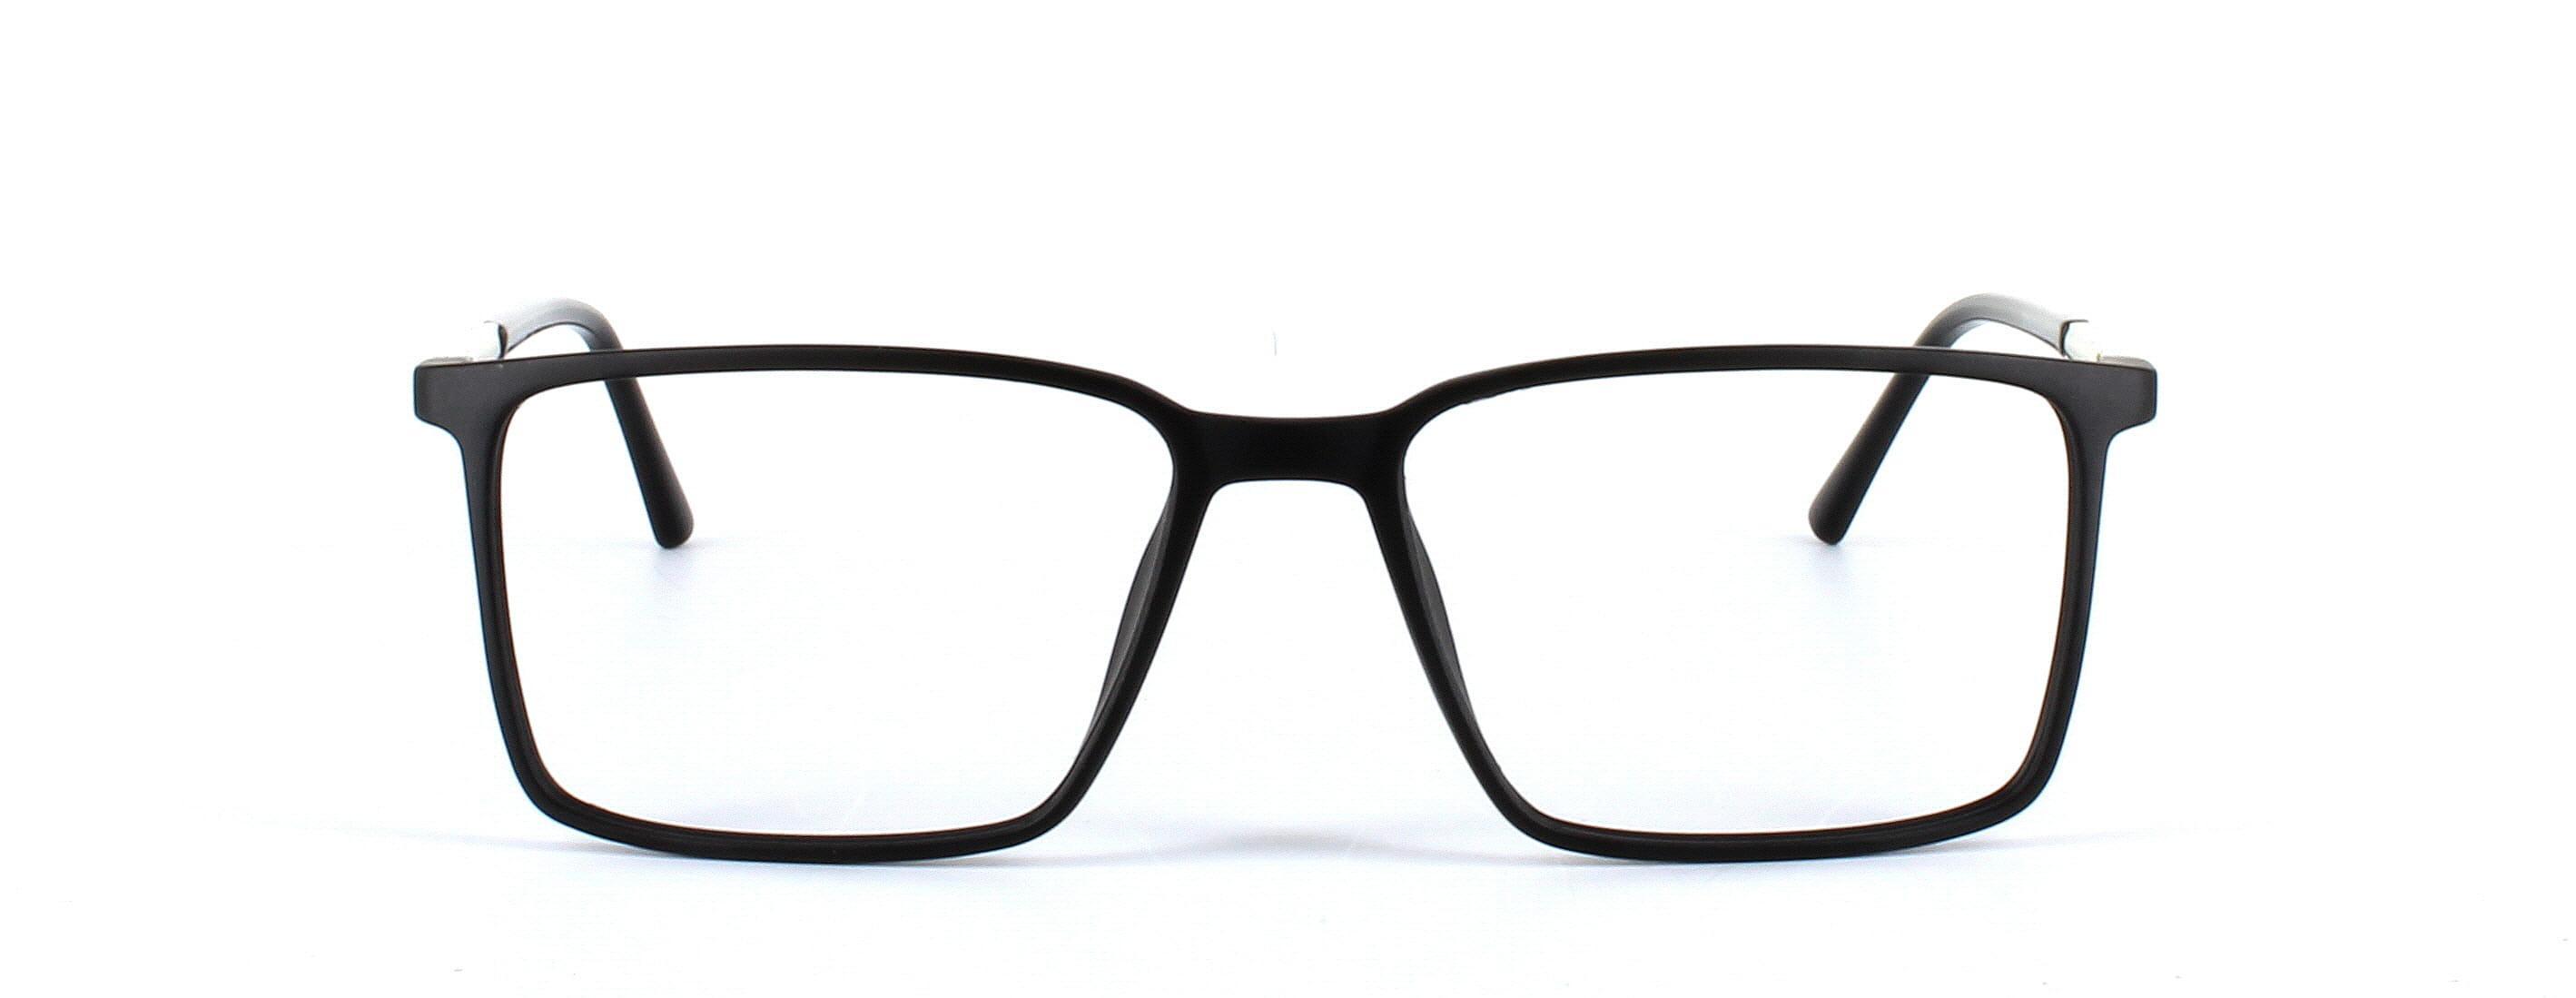 Preveza - Black unisex glasses - image view 5